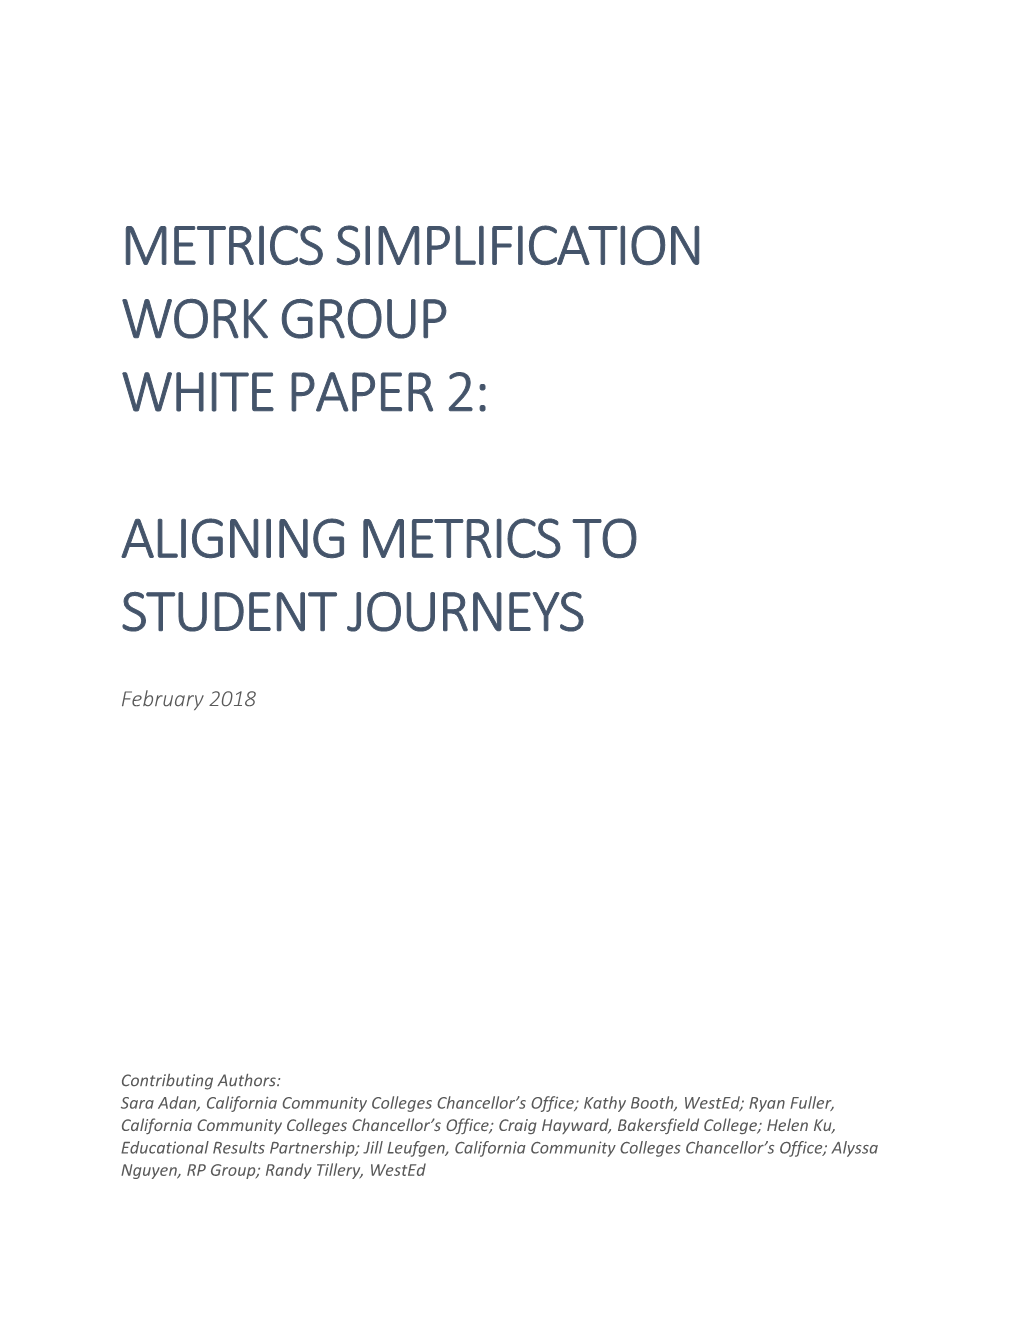 Metrics Simplification